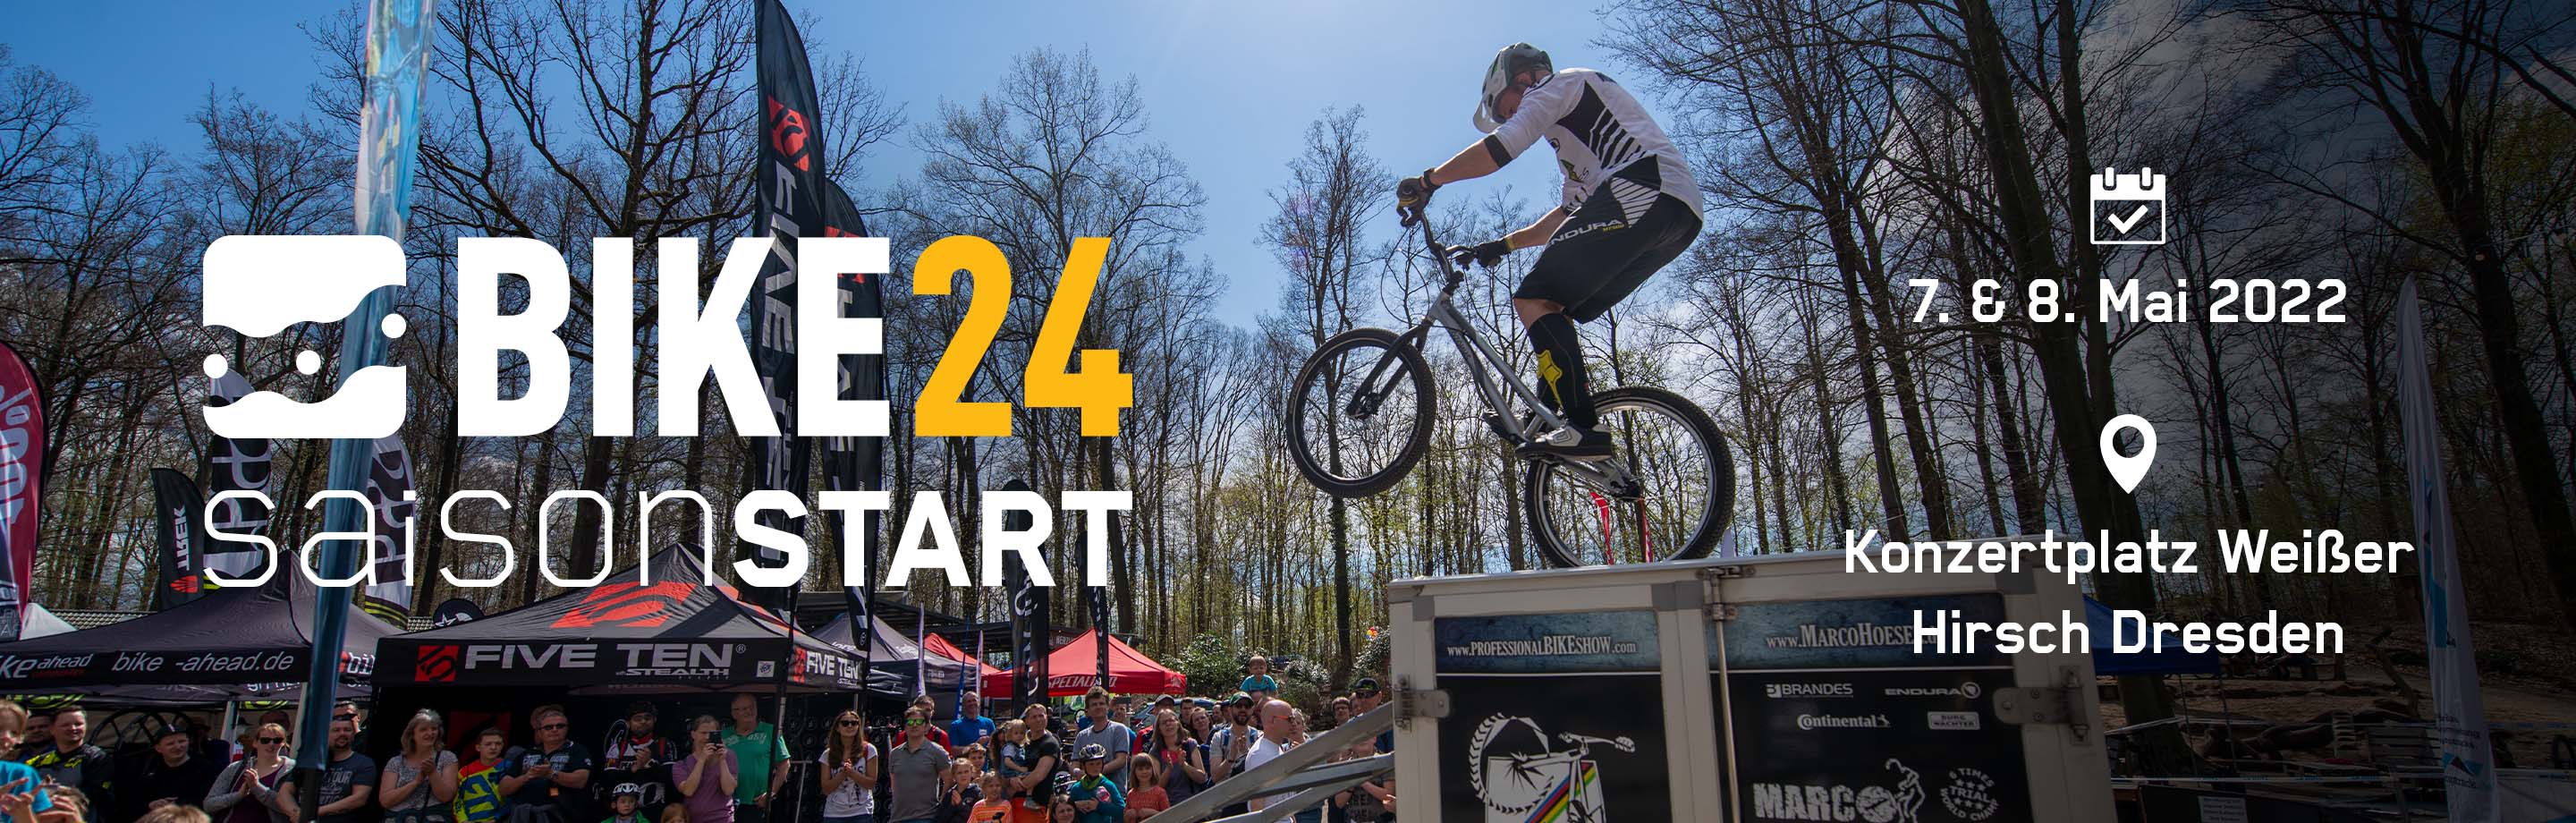 The BIKE24 Saisonstart – We keep you riding!